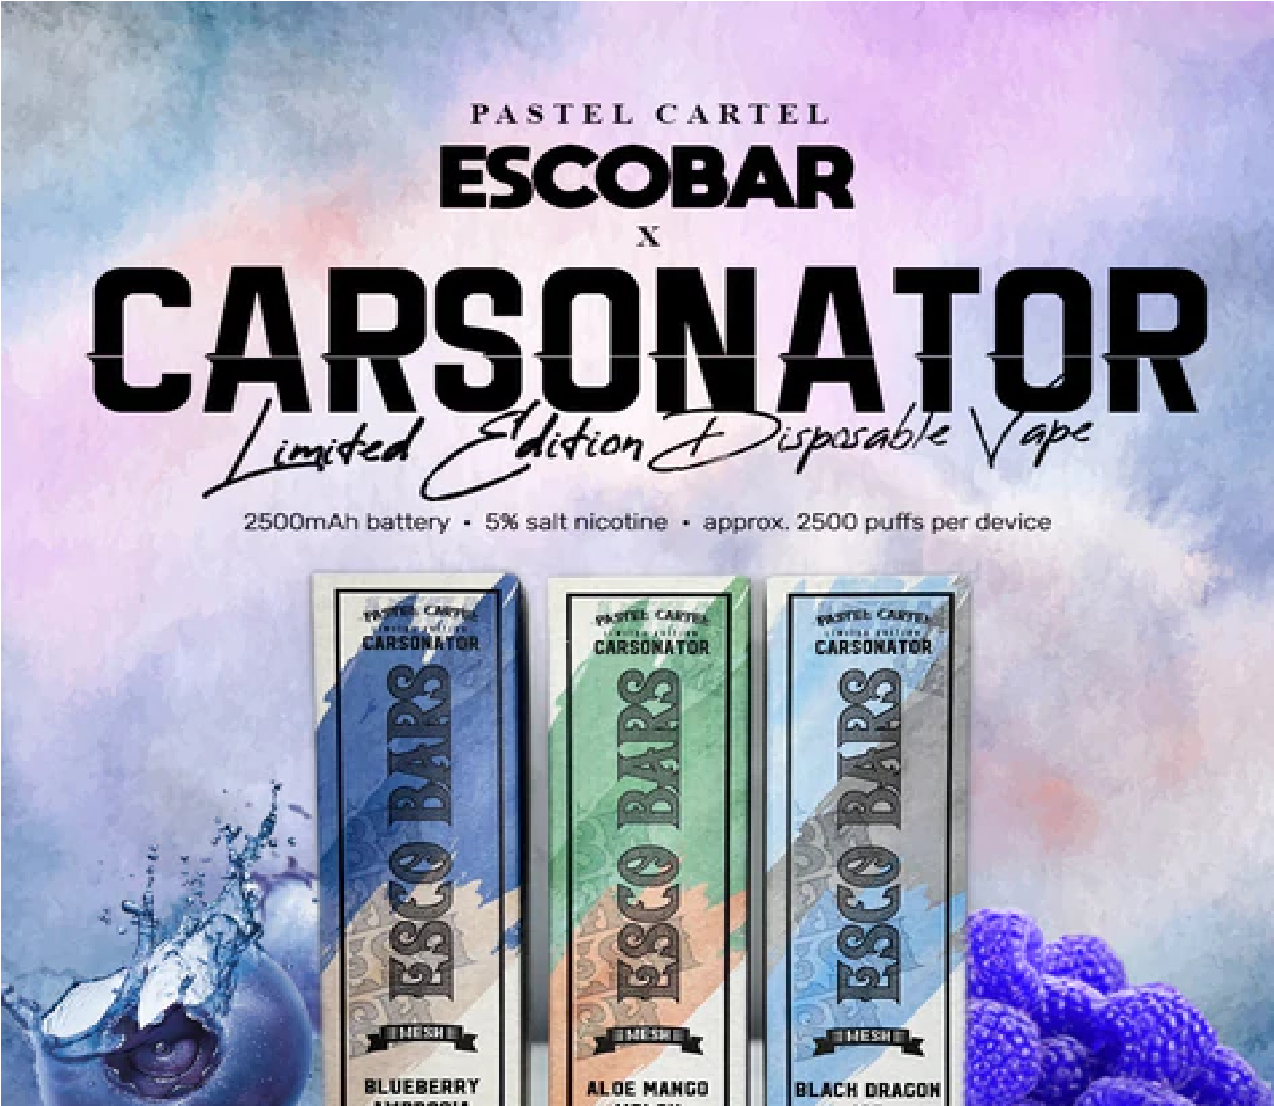 Esco Bars Carsonator 2500 Puff  by Pastel Cartel | Limited Edition Carsonator